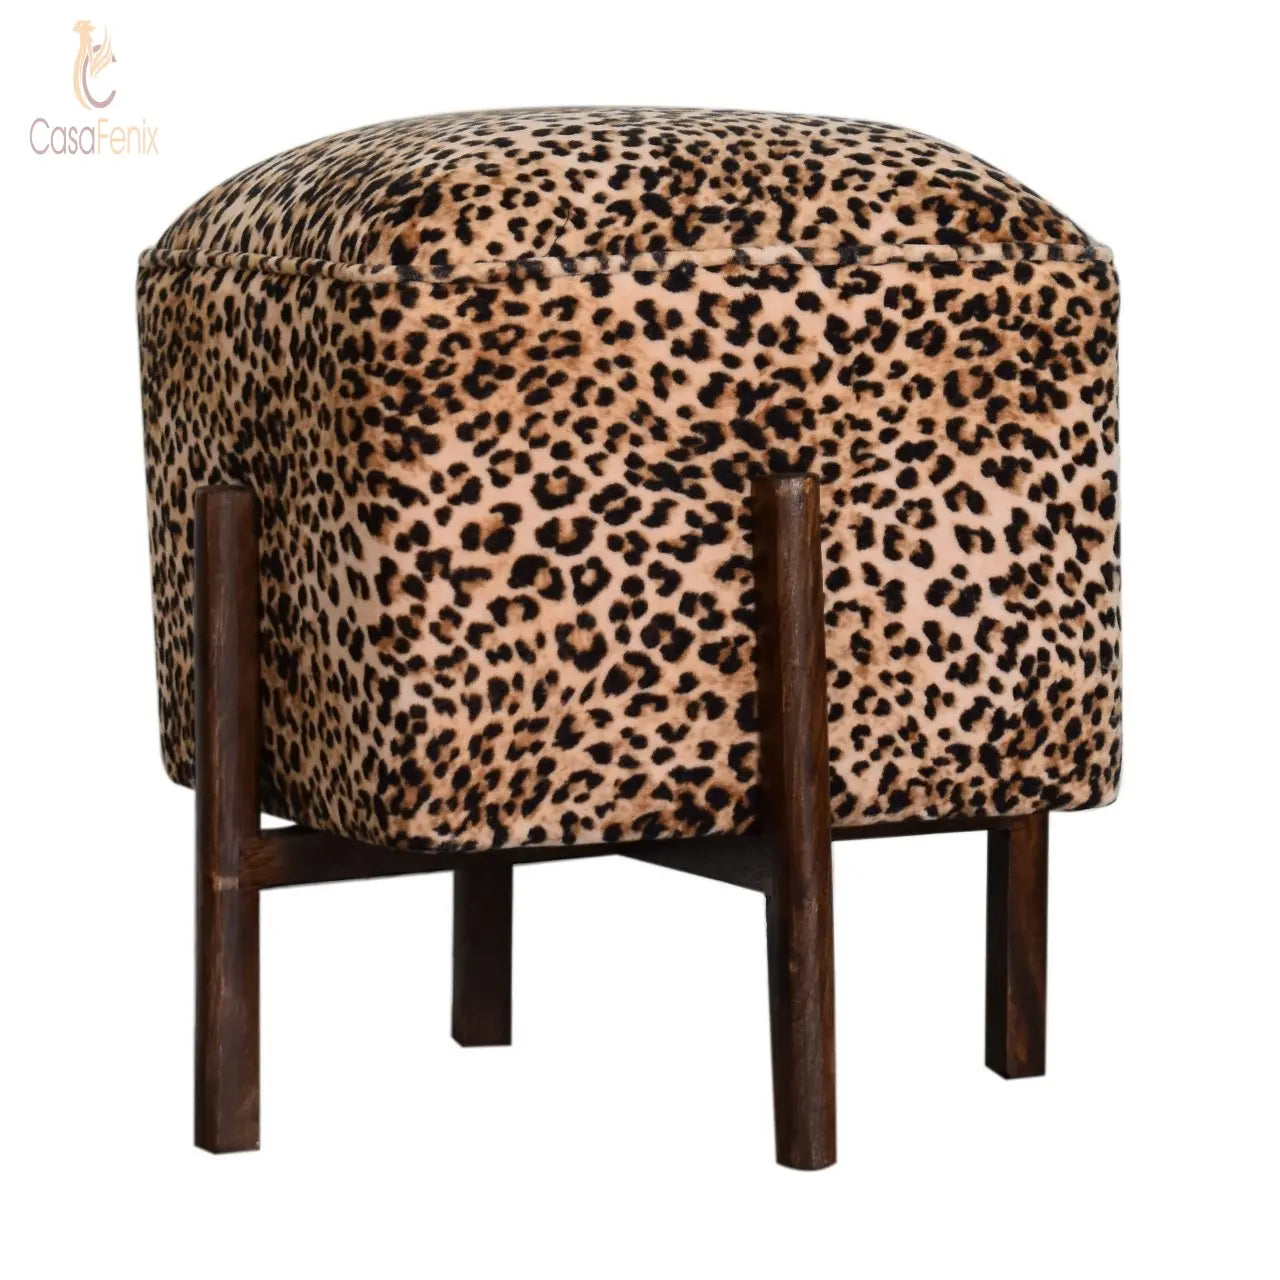 Leopard Print Footstool with Solid Mango Wood Legs - CasaFenix